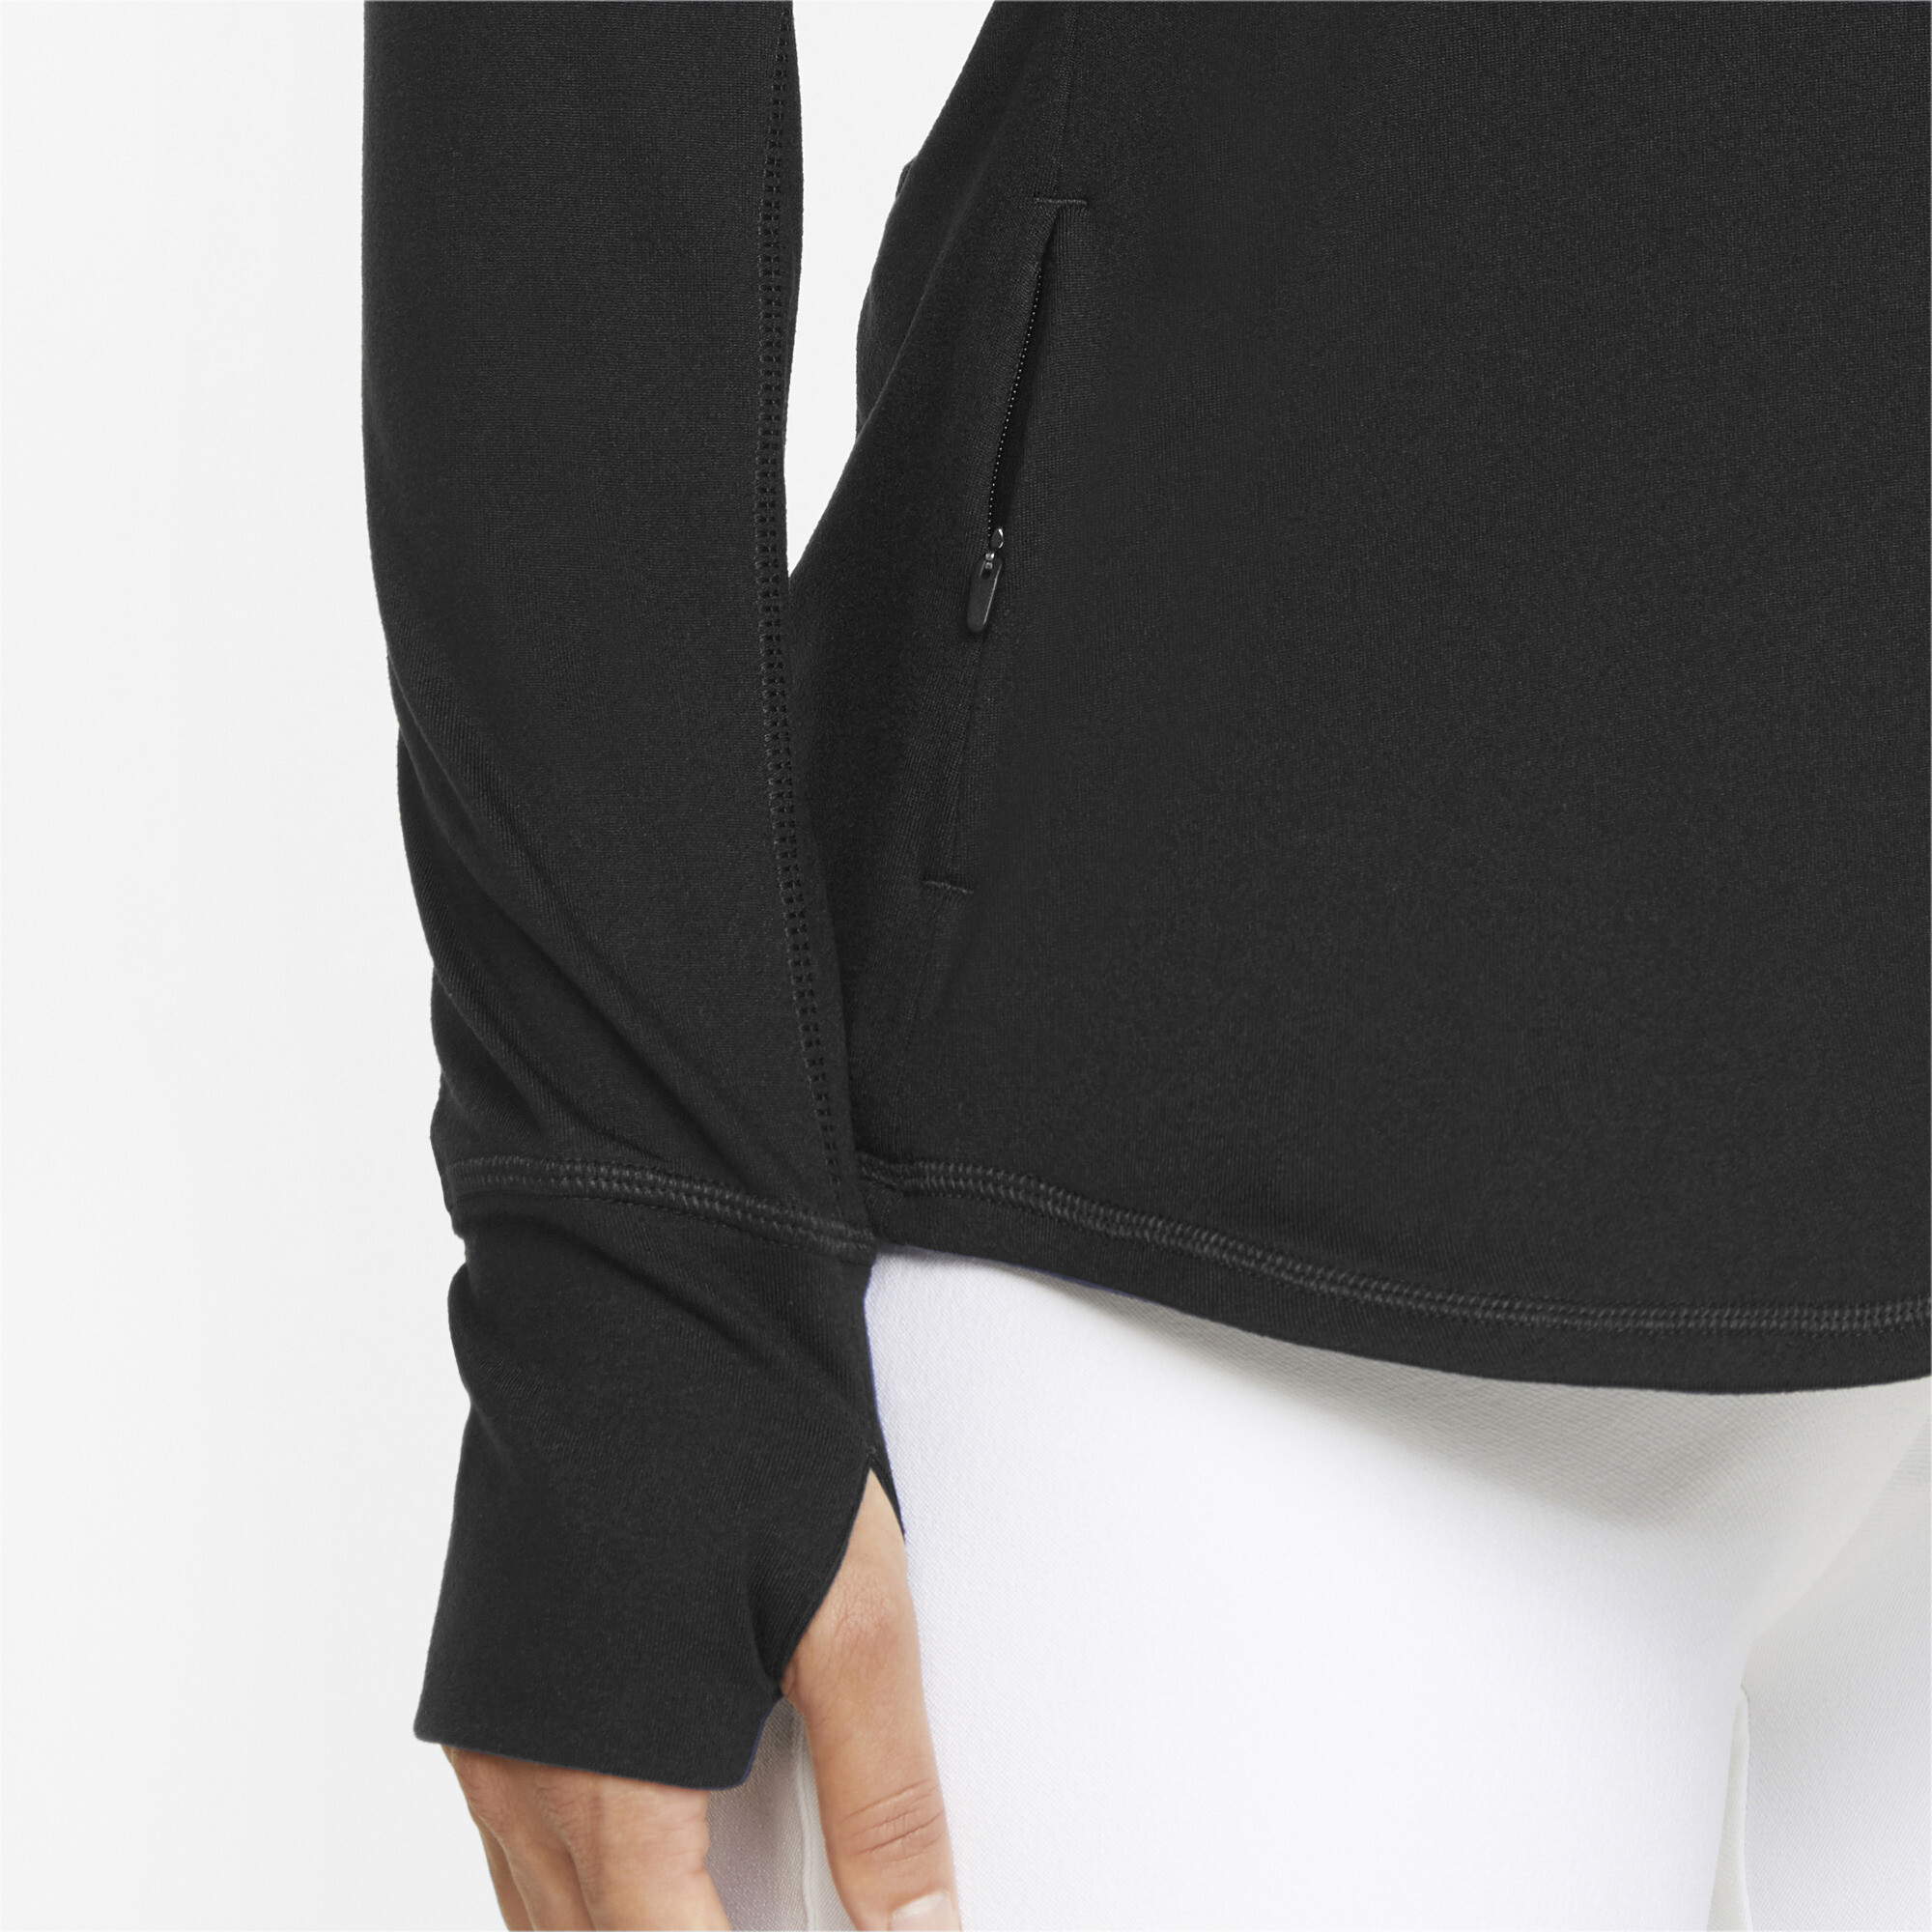 Women's Puma Gamer Quarter-Zip's Golf Pullover Top, Black, Size XS, Clothing